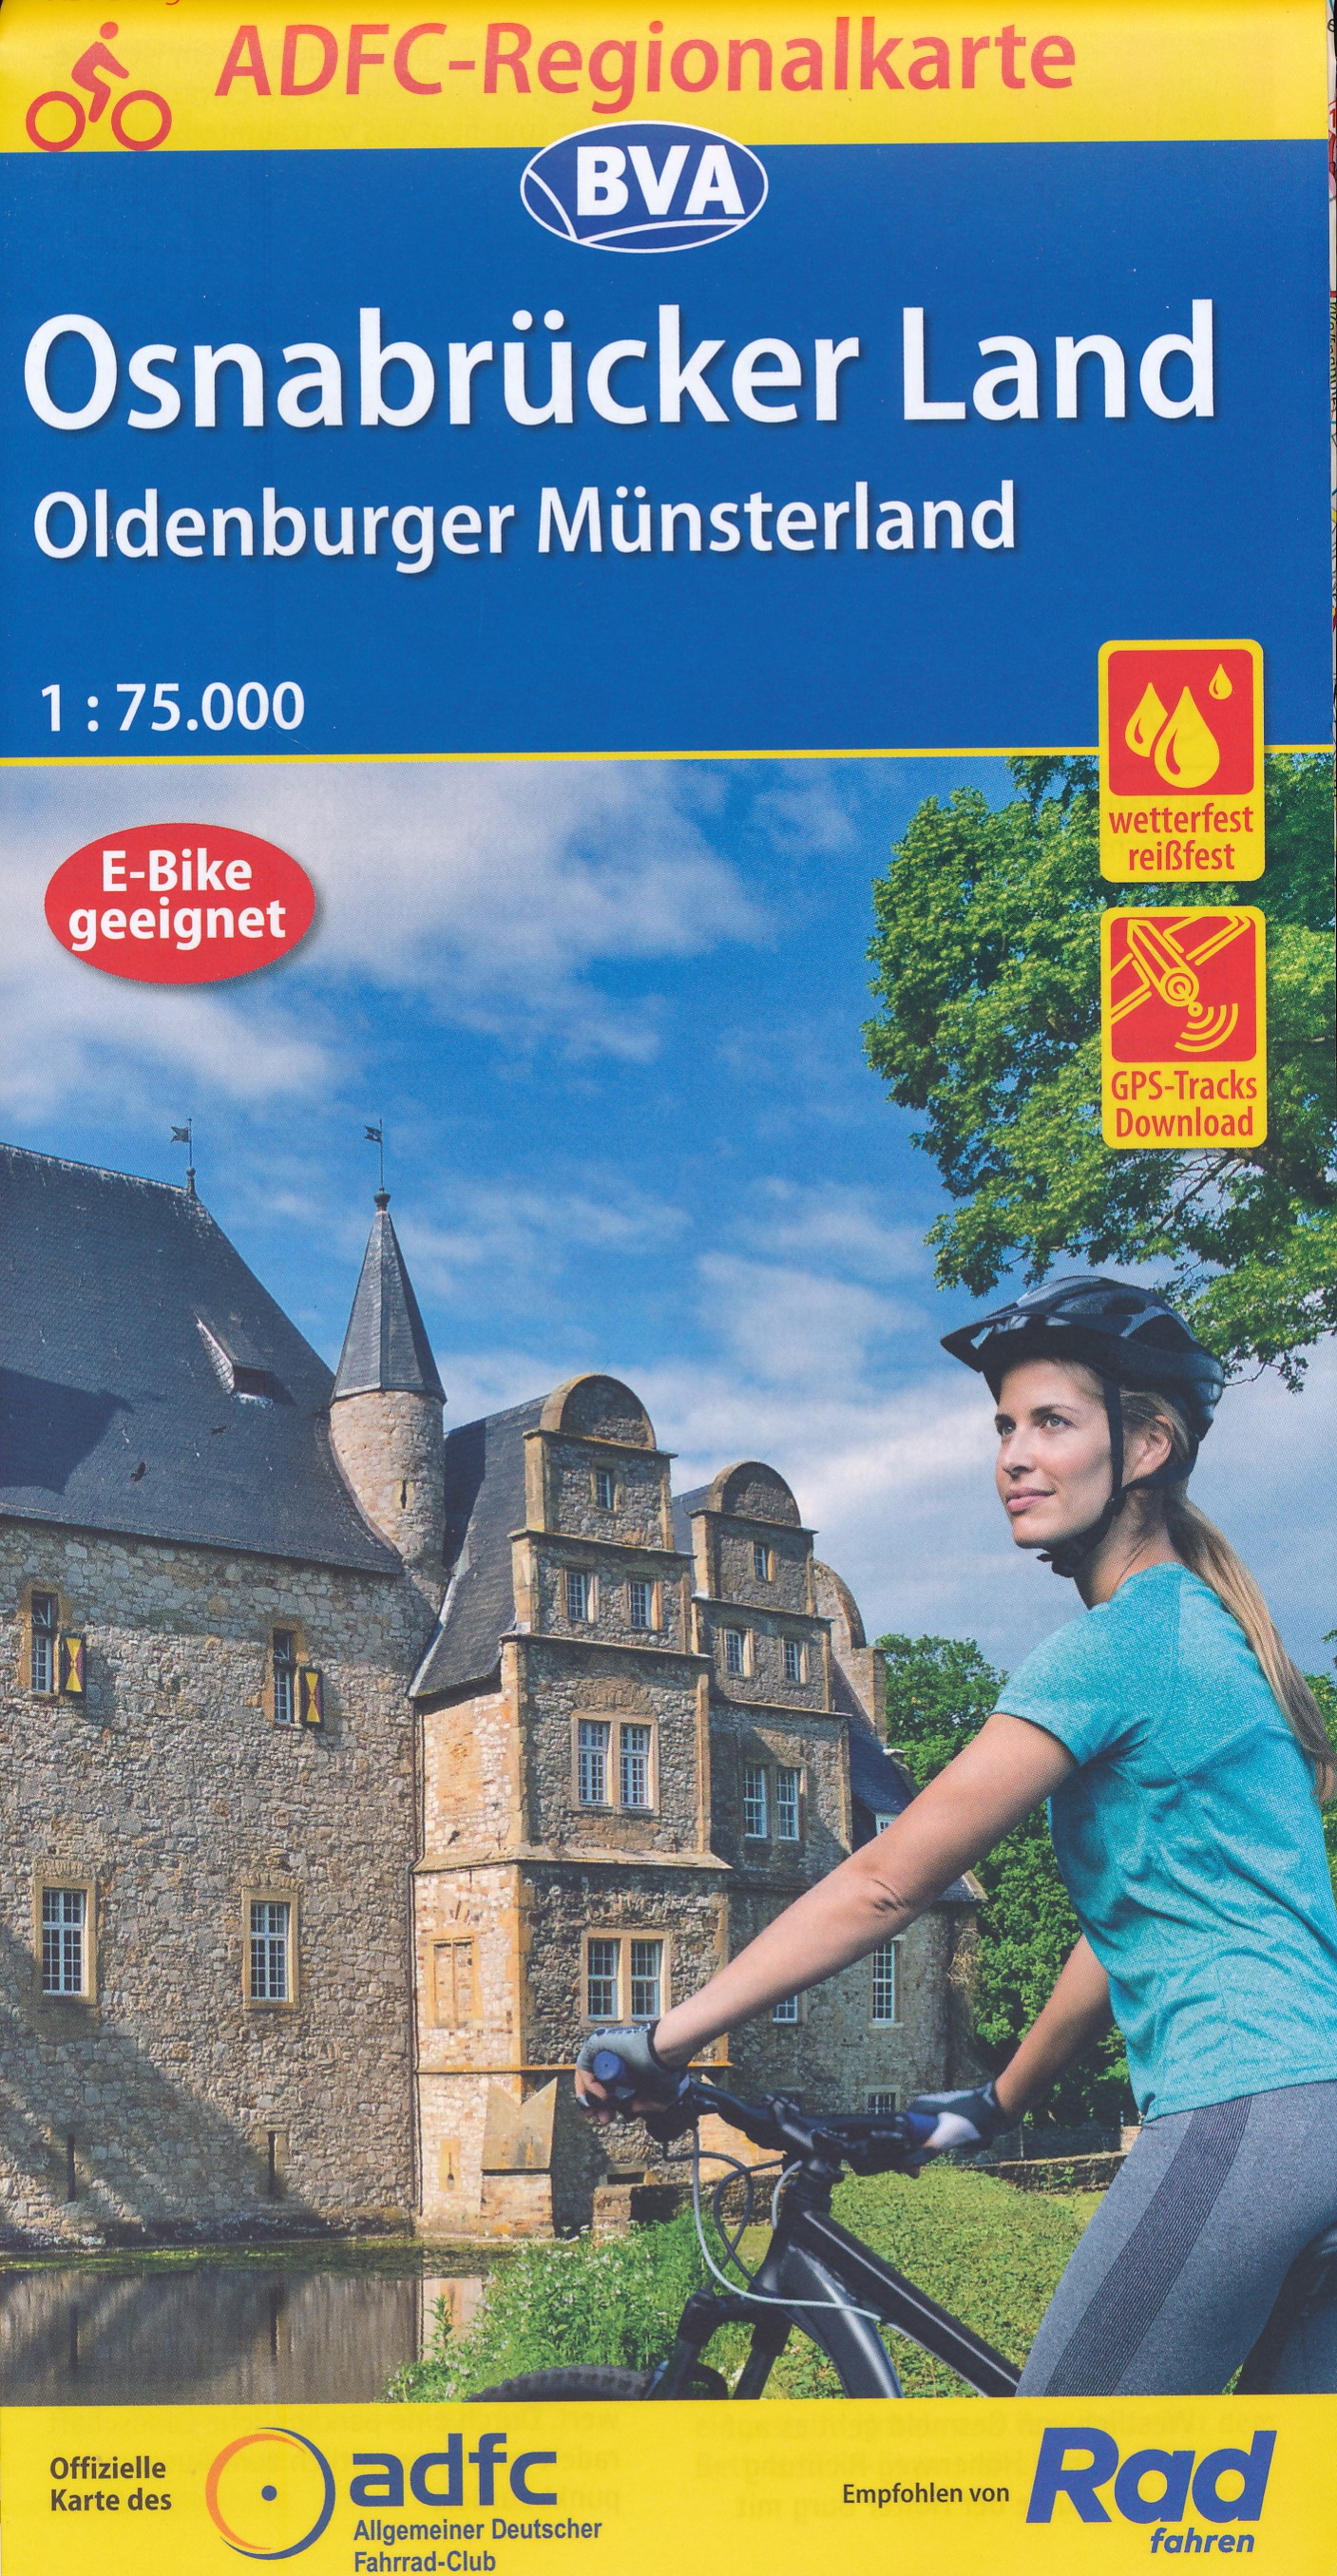 Online bestellen: Fietskaart ADFC Regionalkarte Osnabrucker Land | BVA BikeMedia